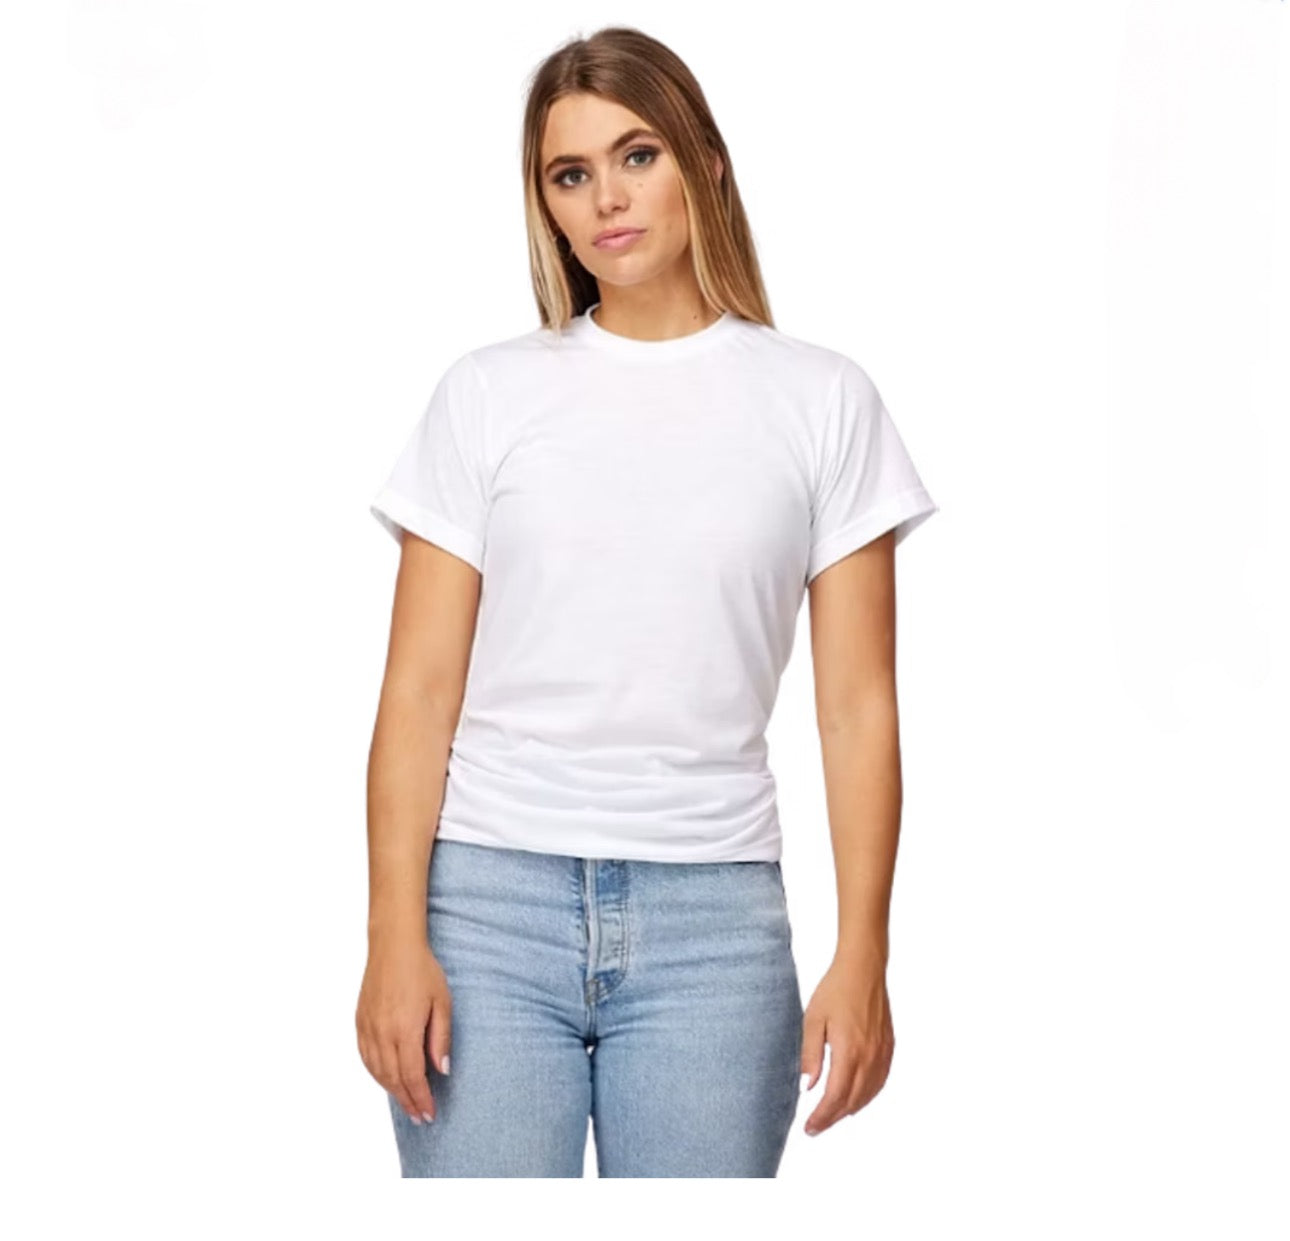 Tultex Unisex T-Shirts